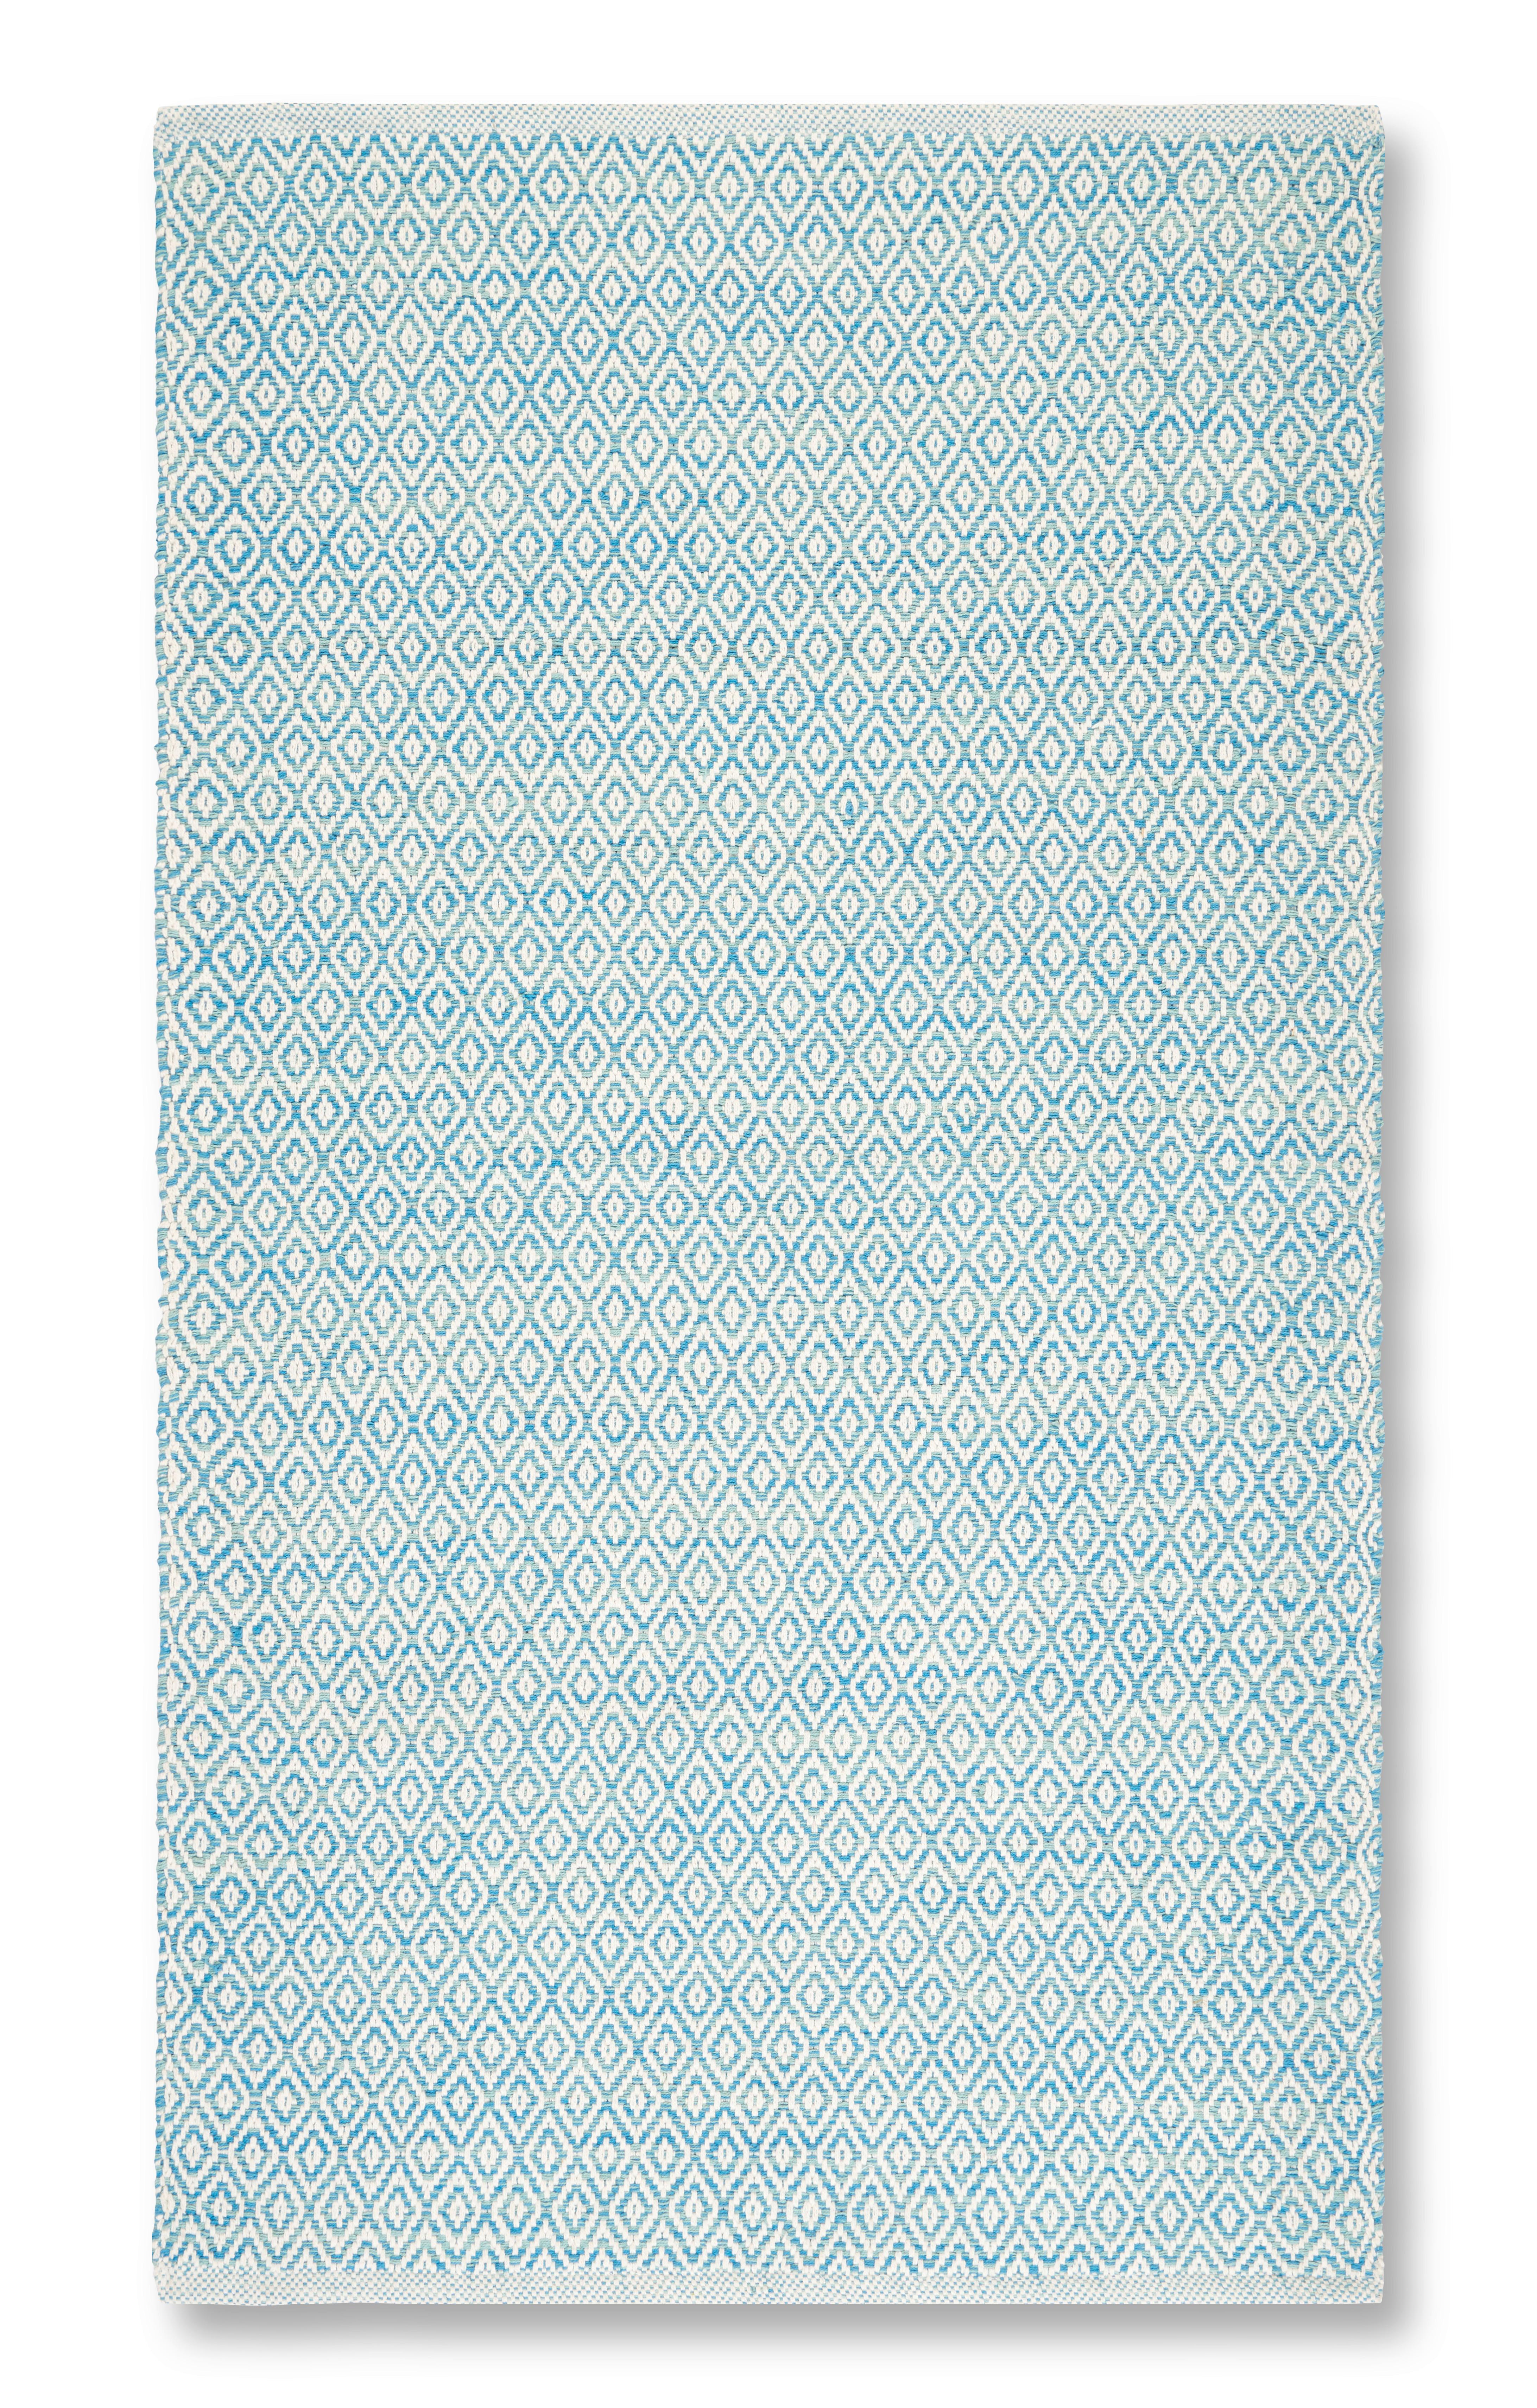 Handwebeteppich Carola in Blau ca. 80x150cm - Blau, Basics, Textil (80/150cm) - Modern Living